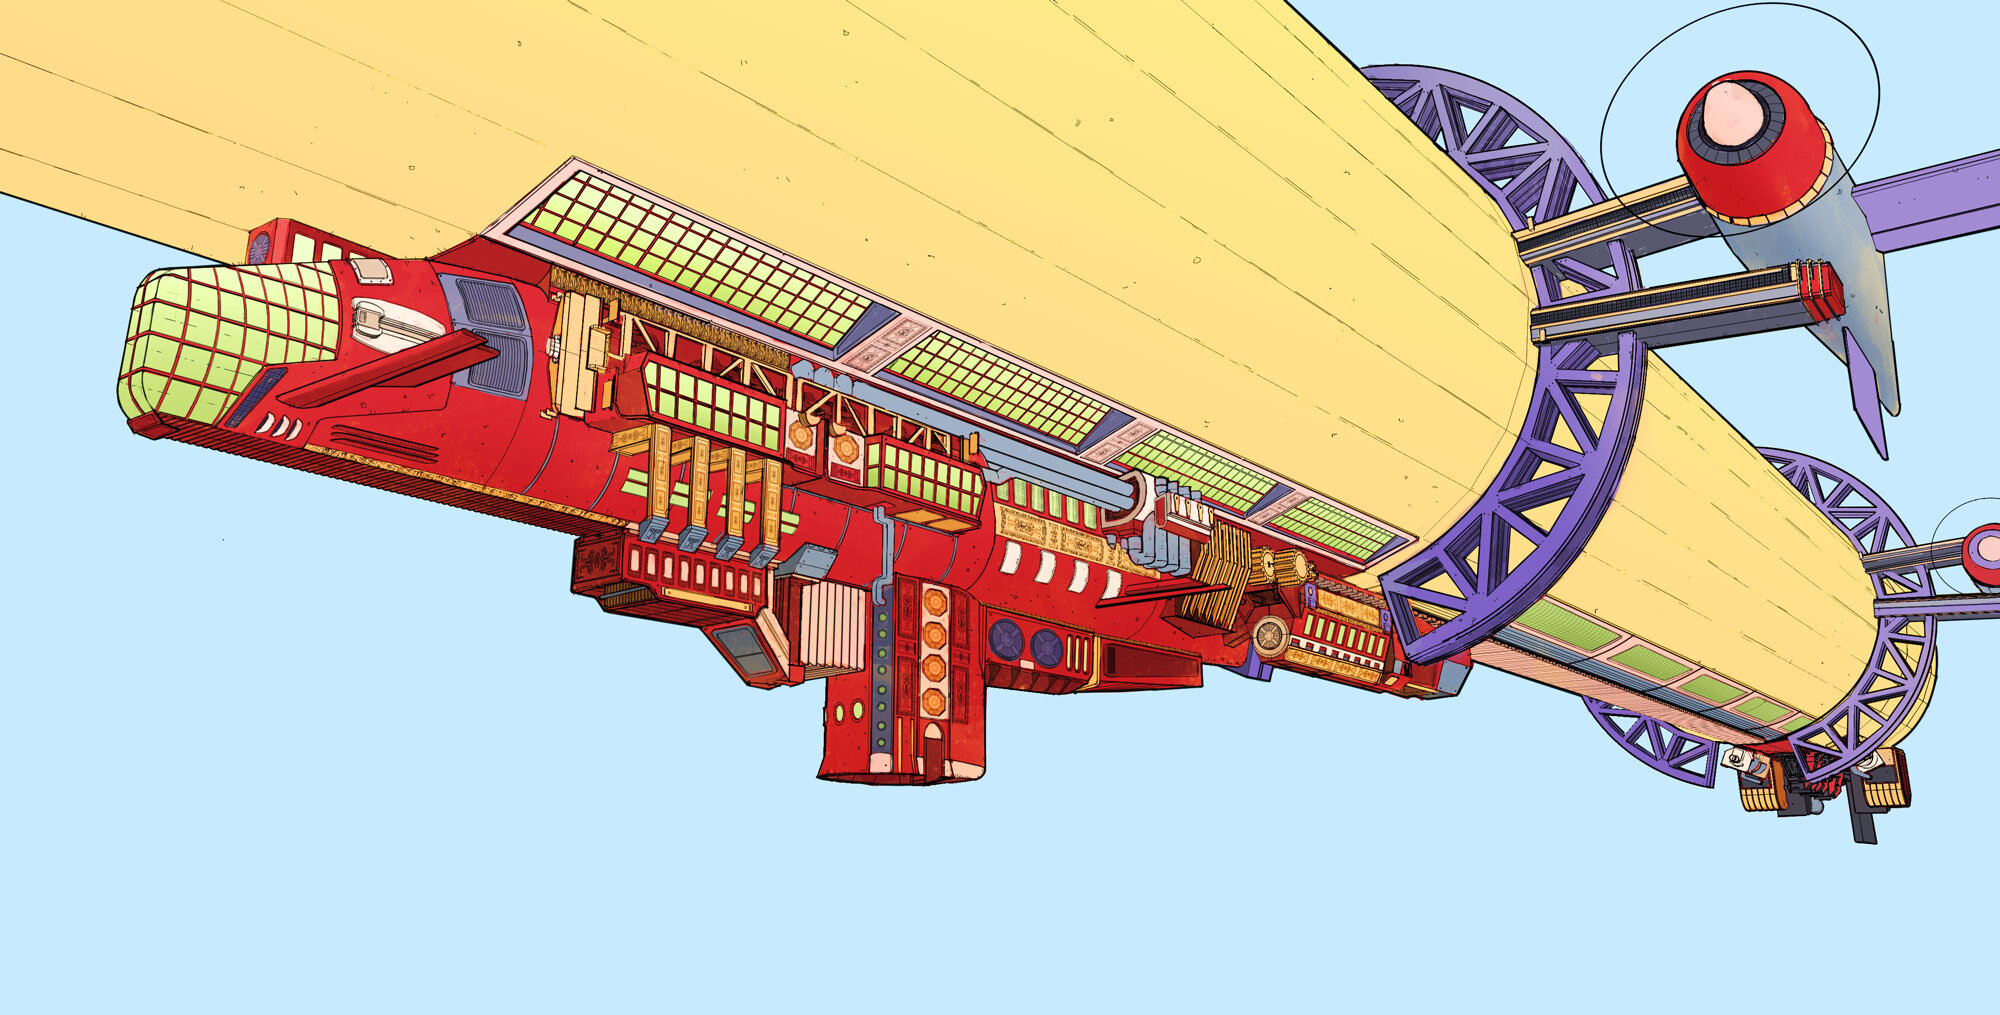 zeppelin-scifi-moebius-air-ship-art.jpg